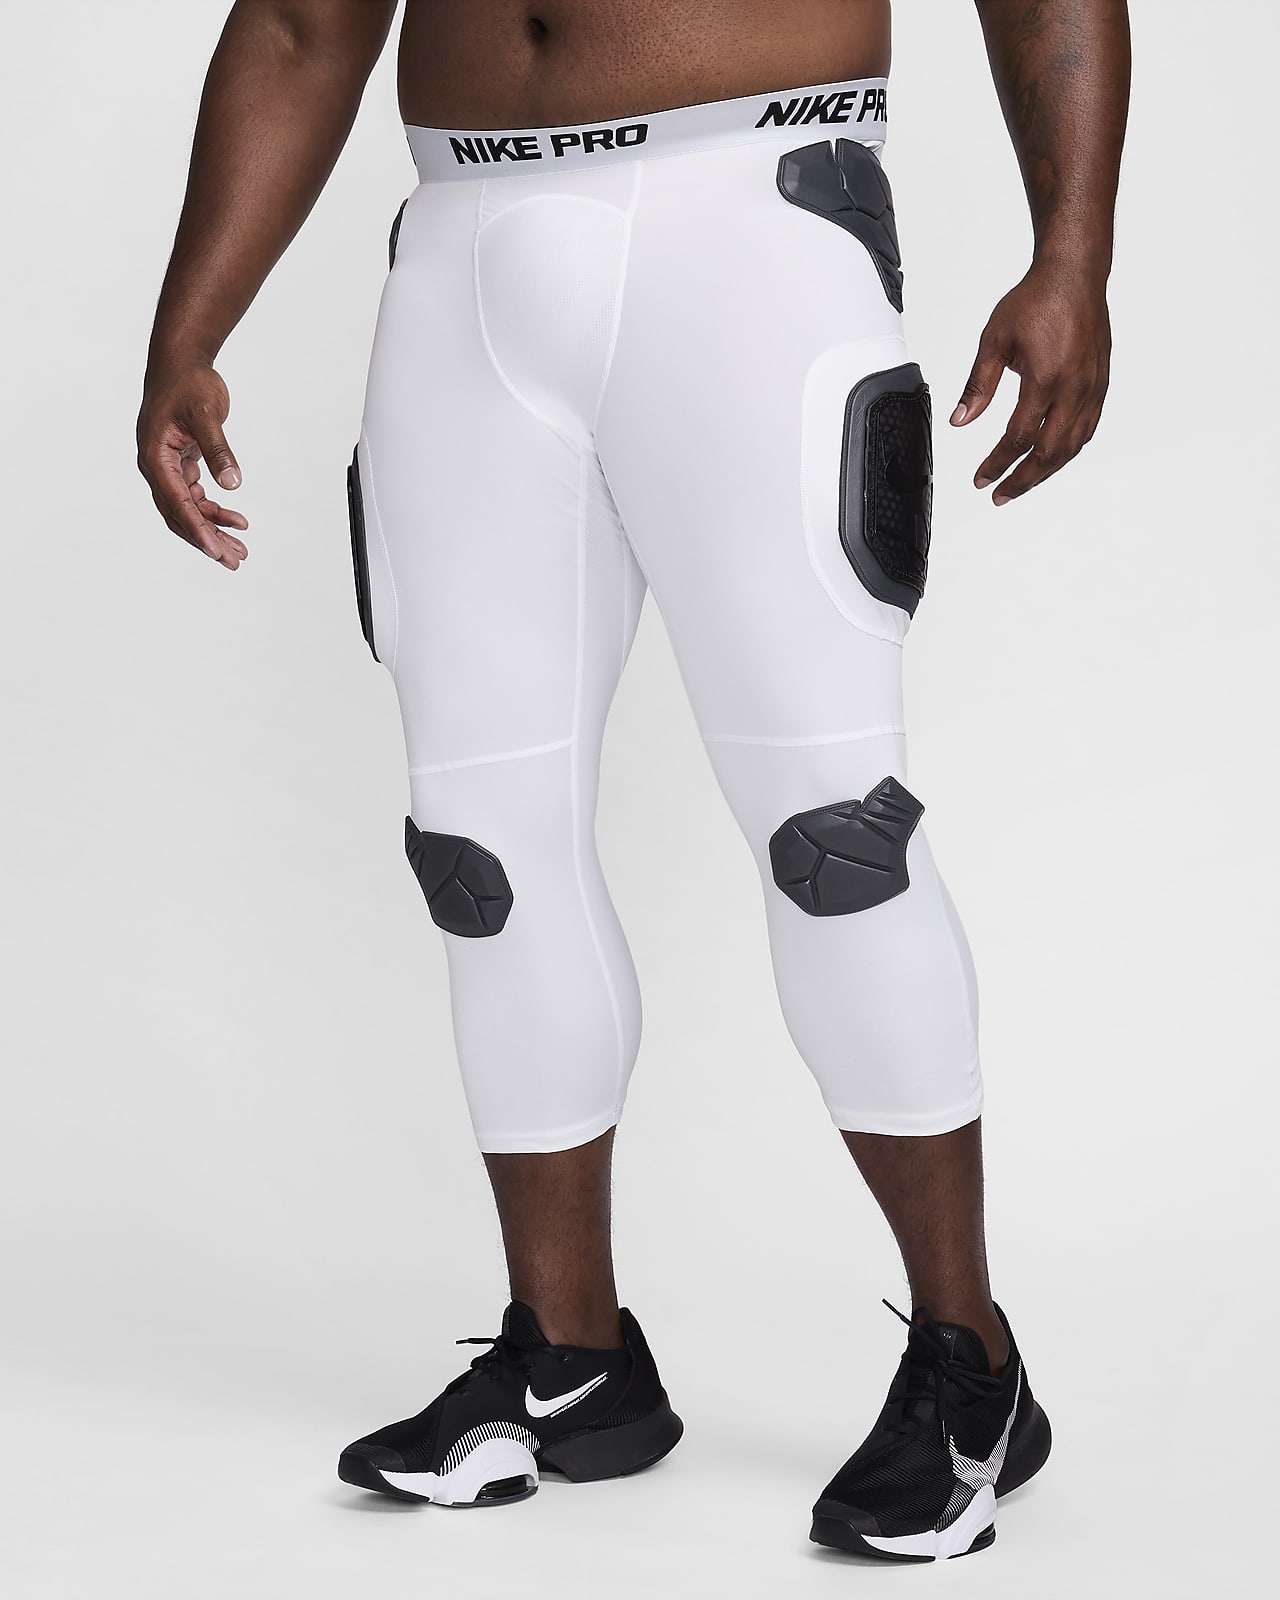 Nike Pro Tights 3/4 White/Black SM